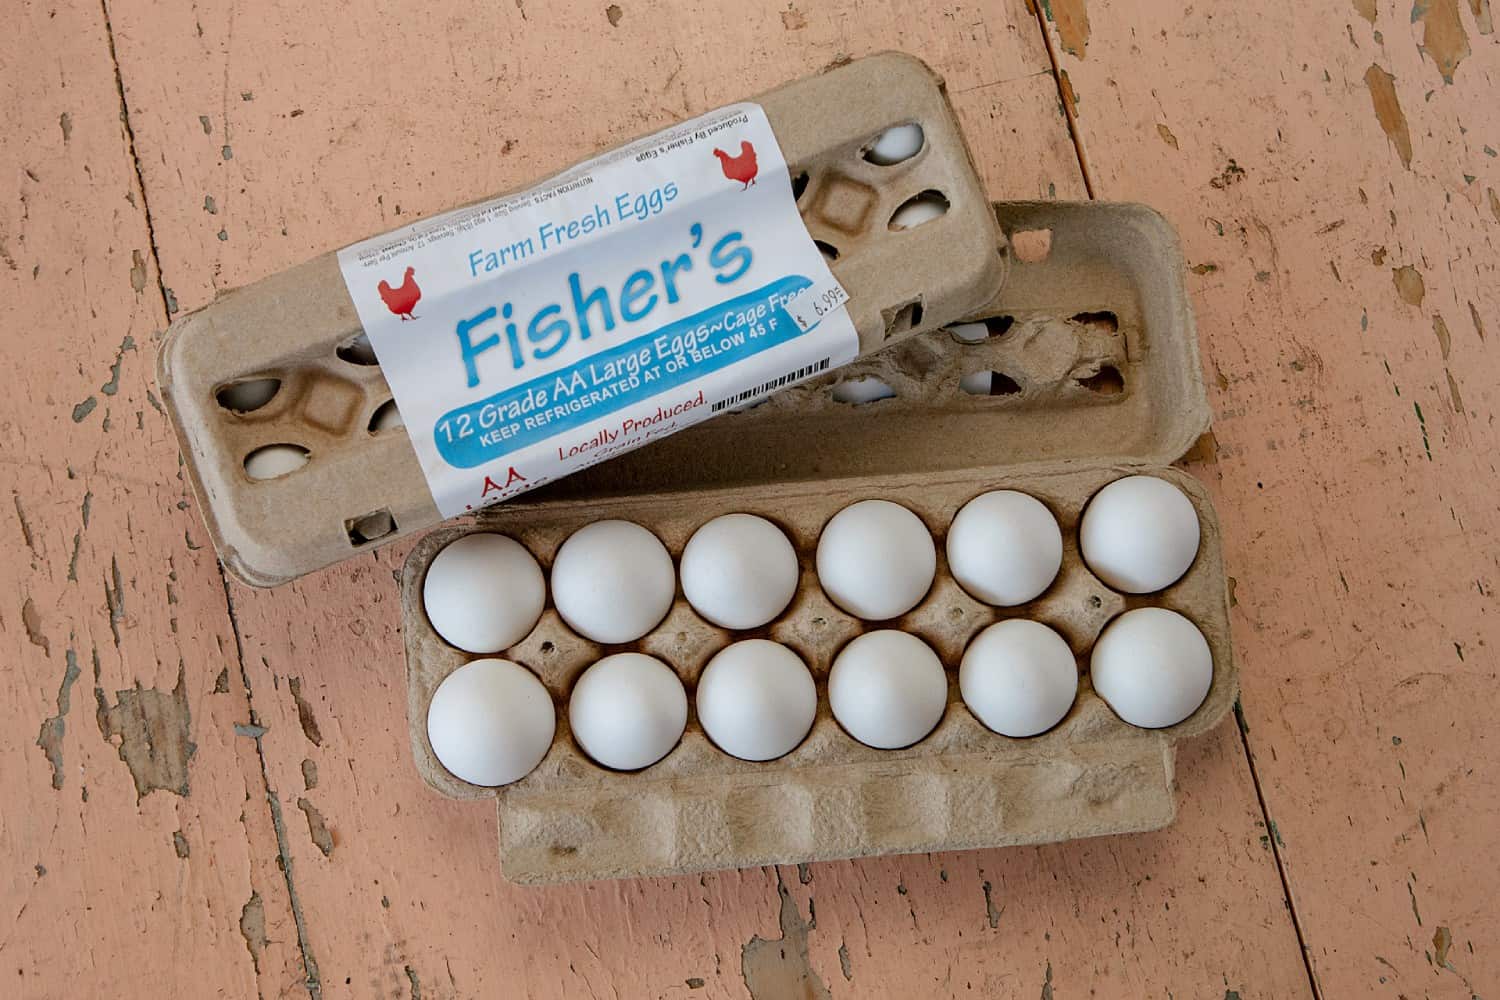 A dozen Fisher's eggs